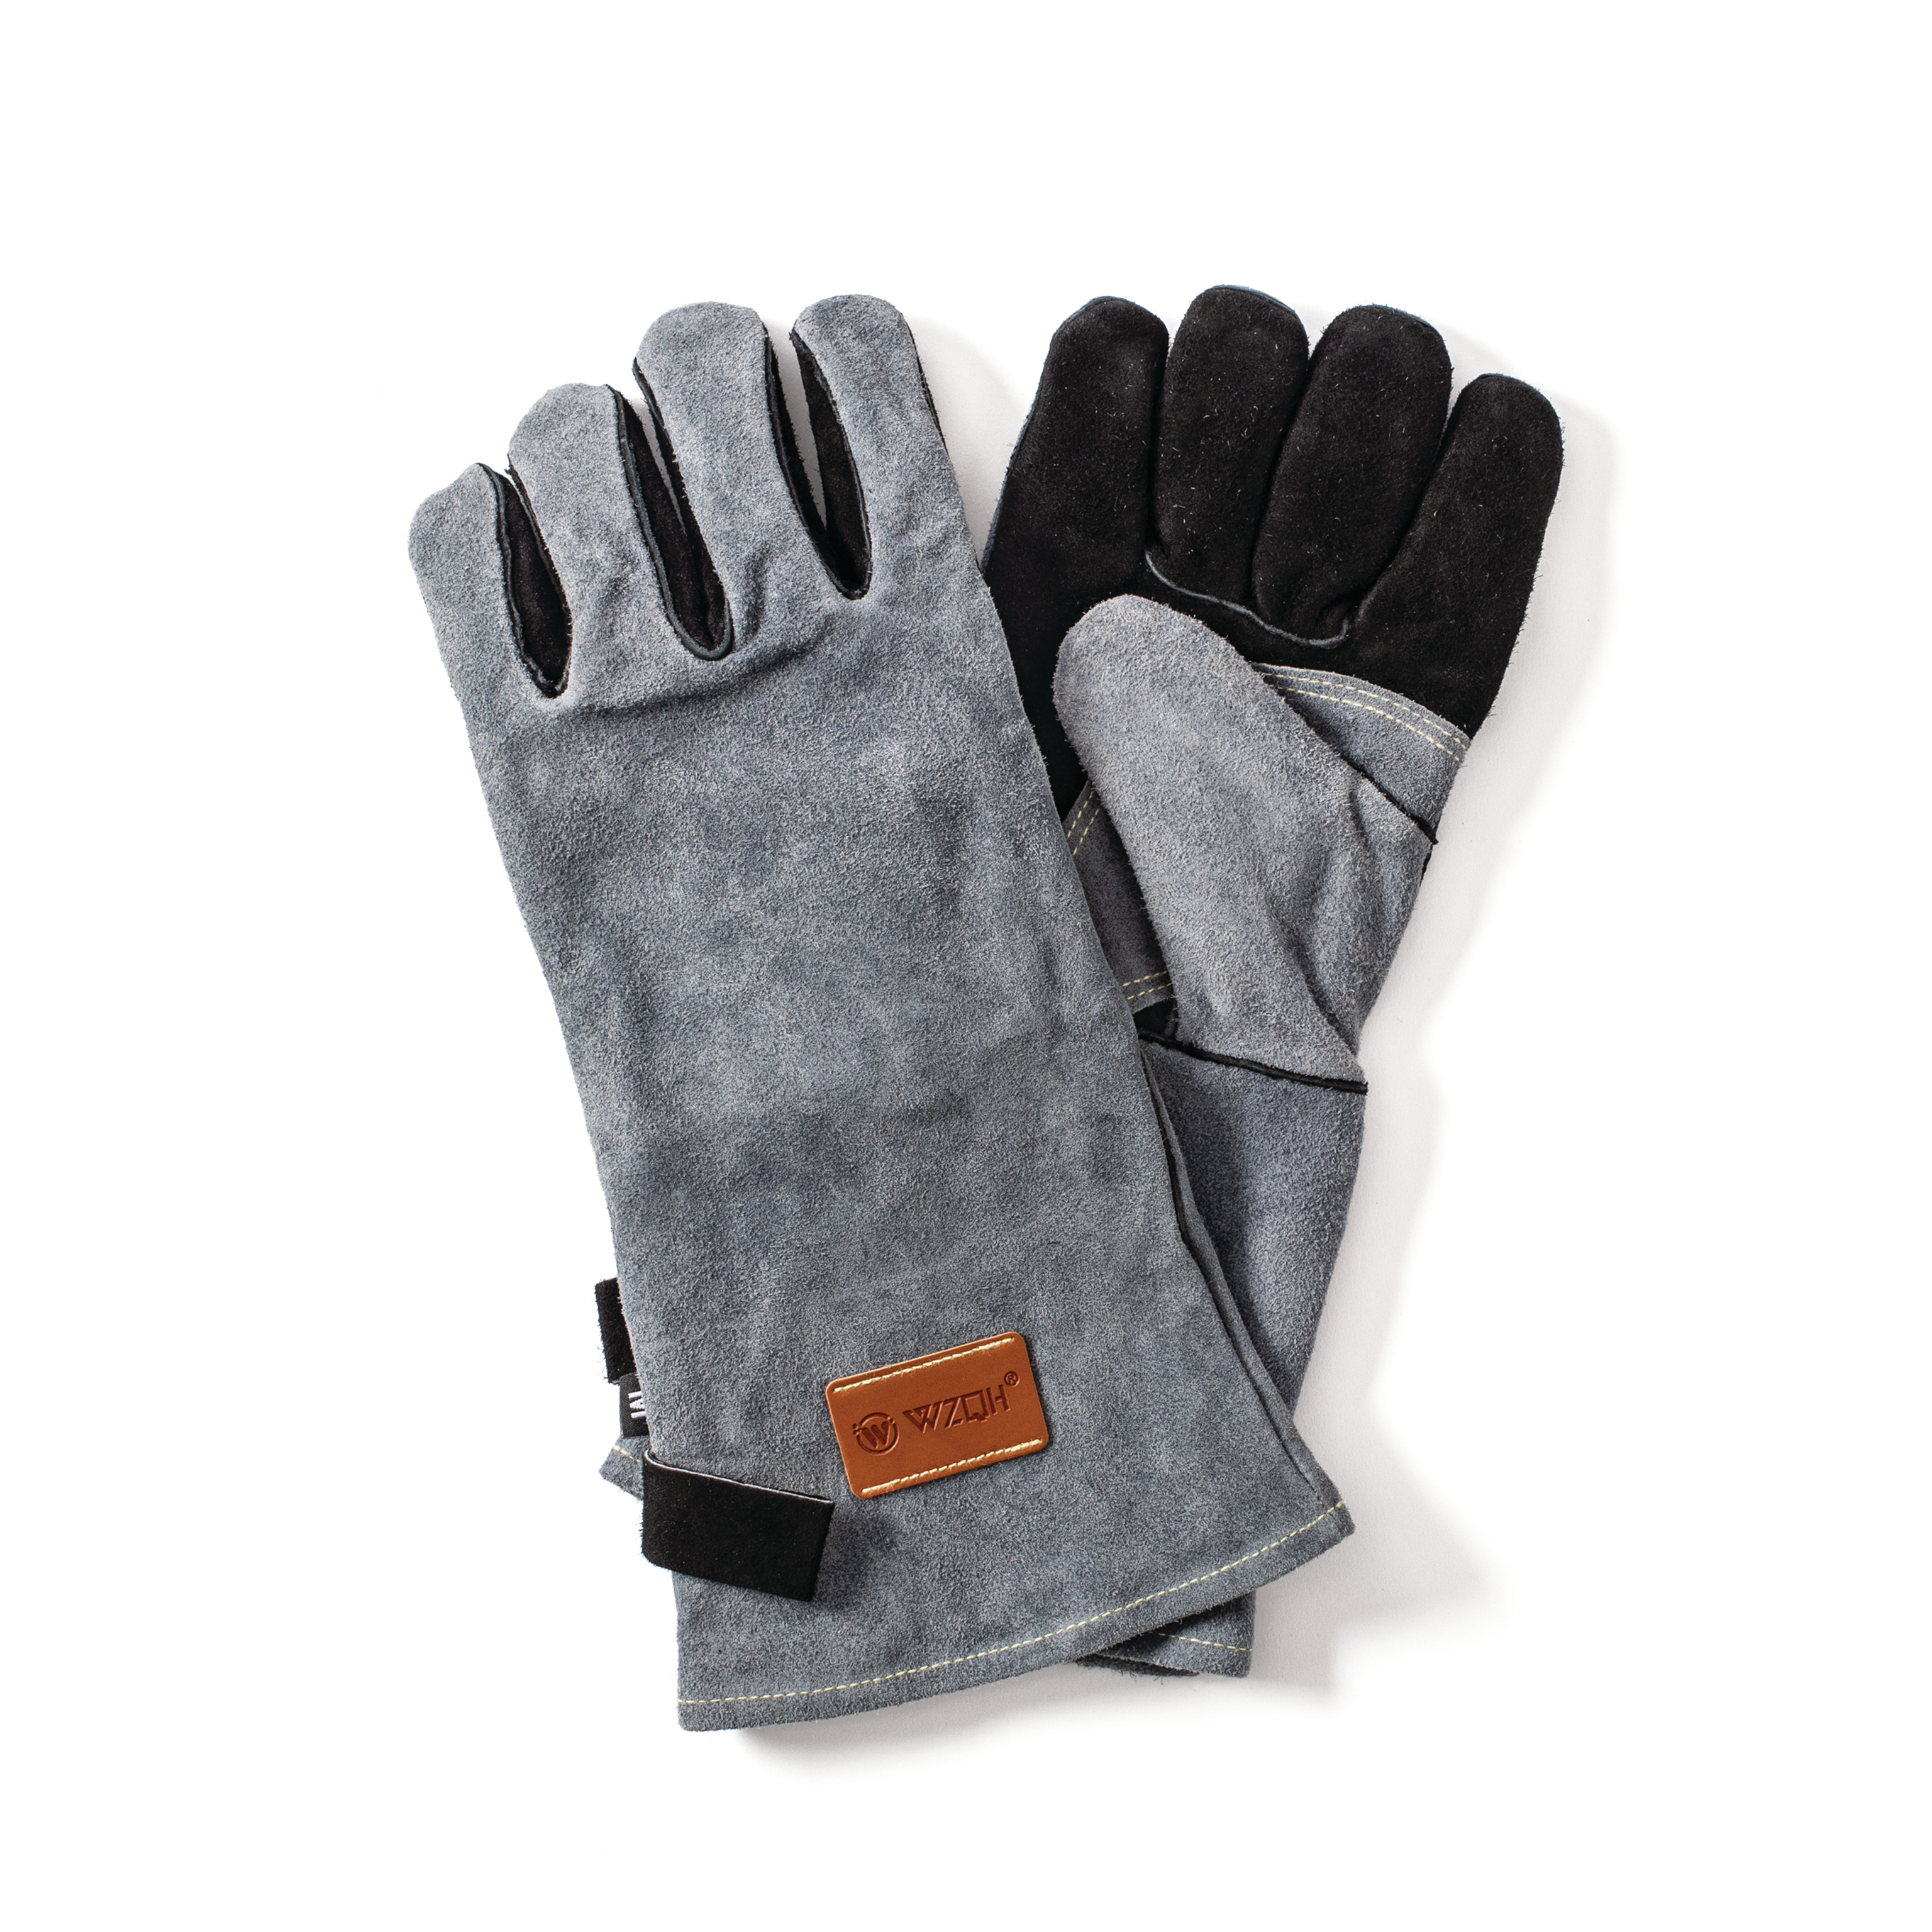 Grill Armor Gloves Gloves